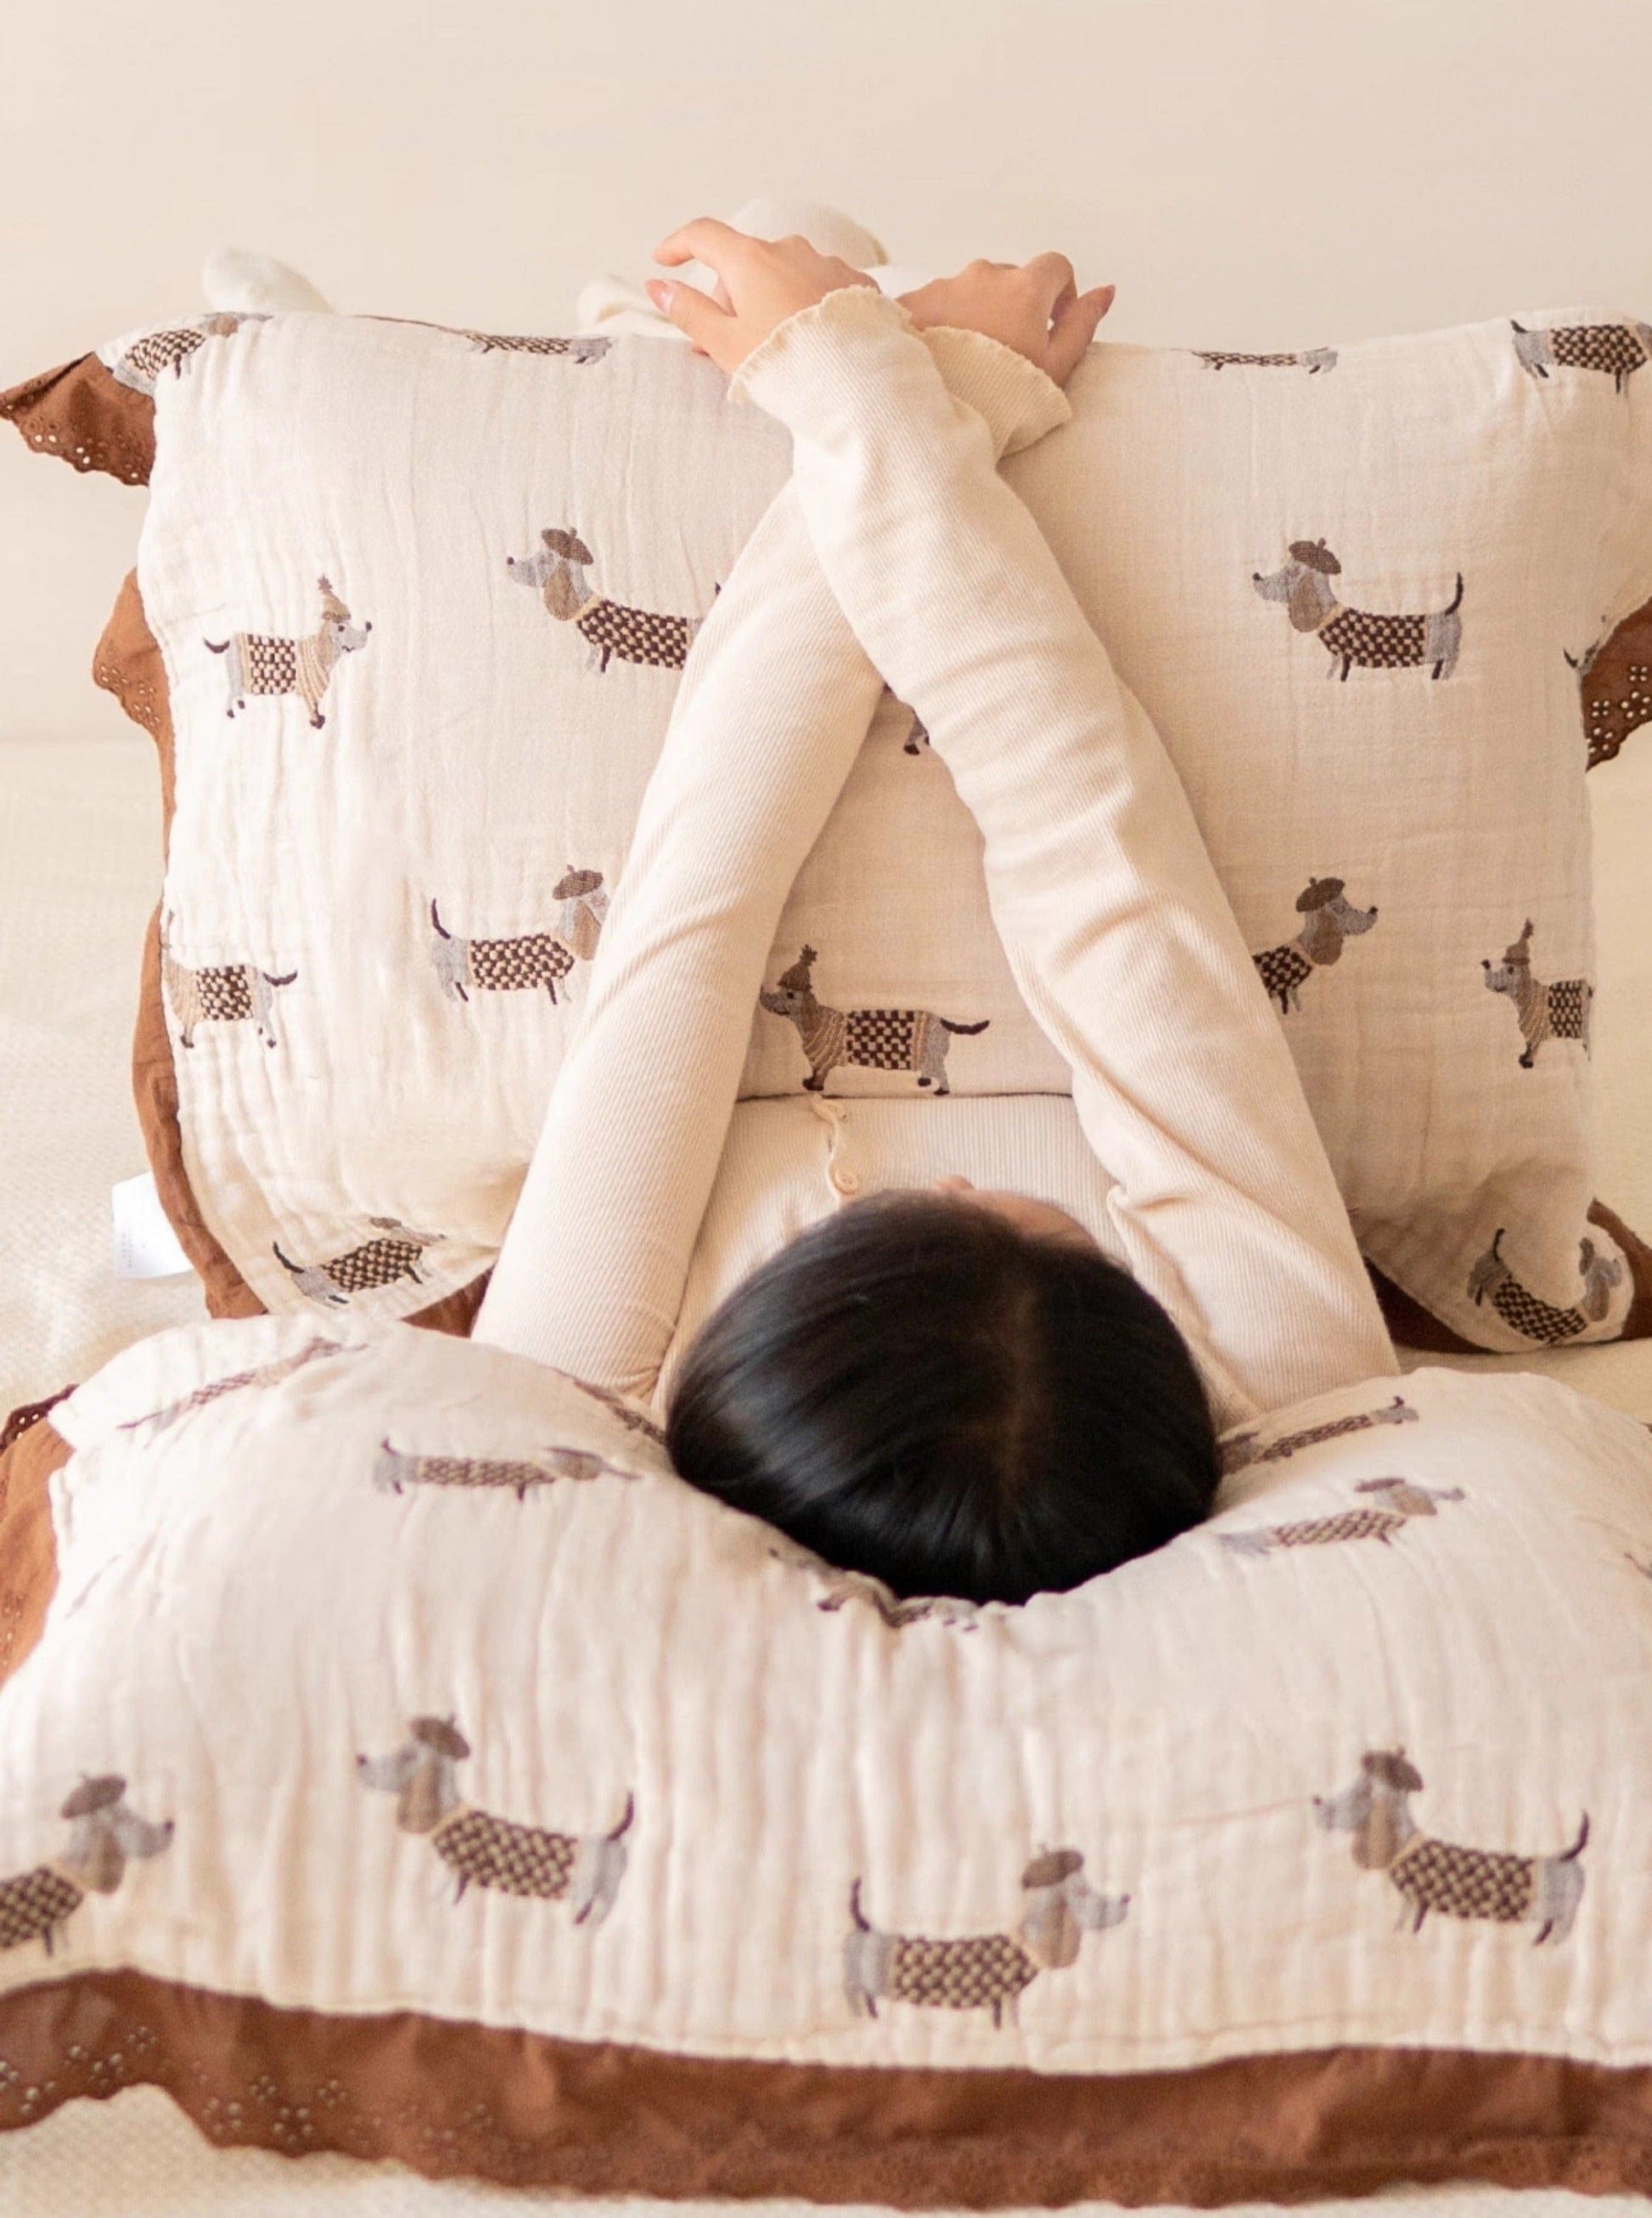 Cotton Dachshund Pillowcases The Doxie World